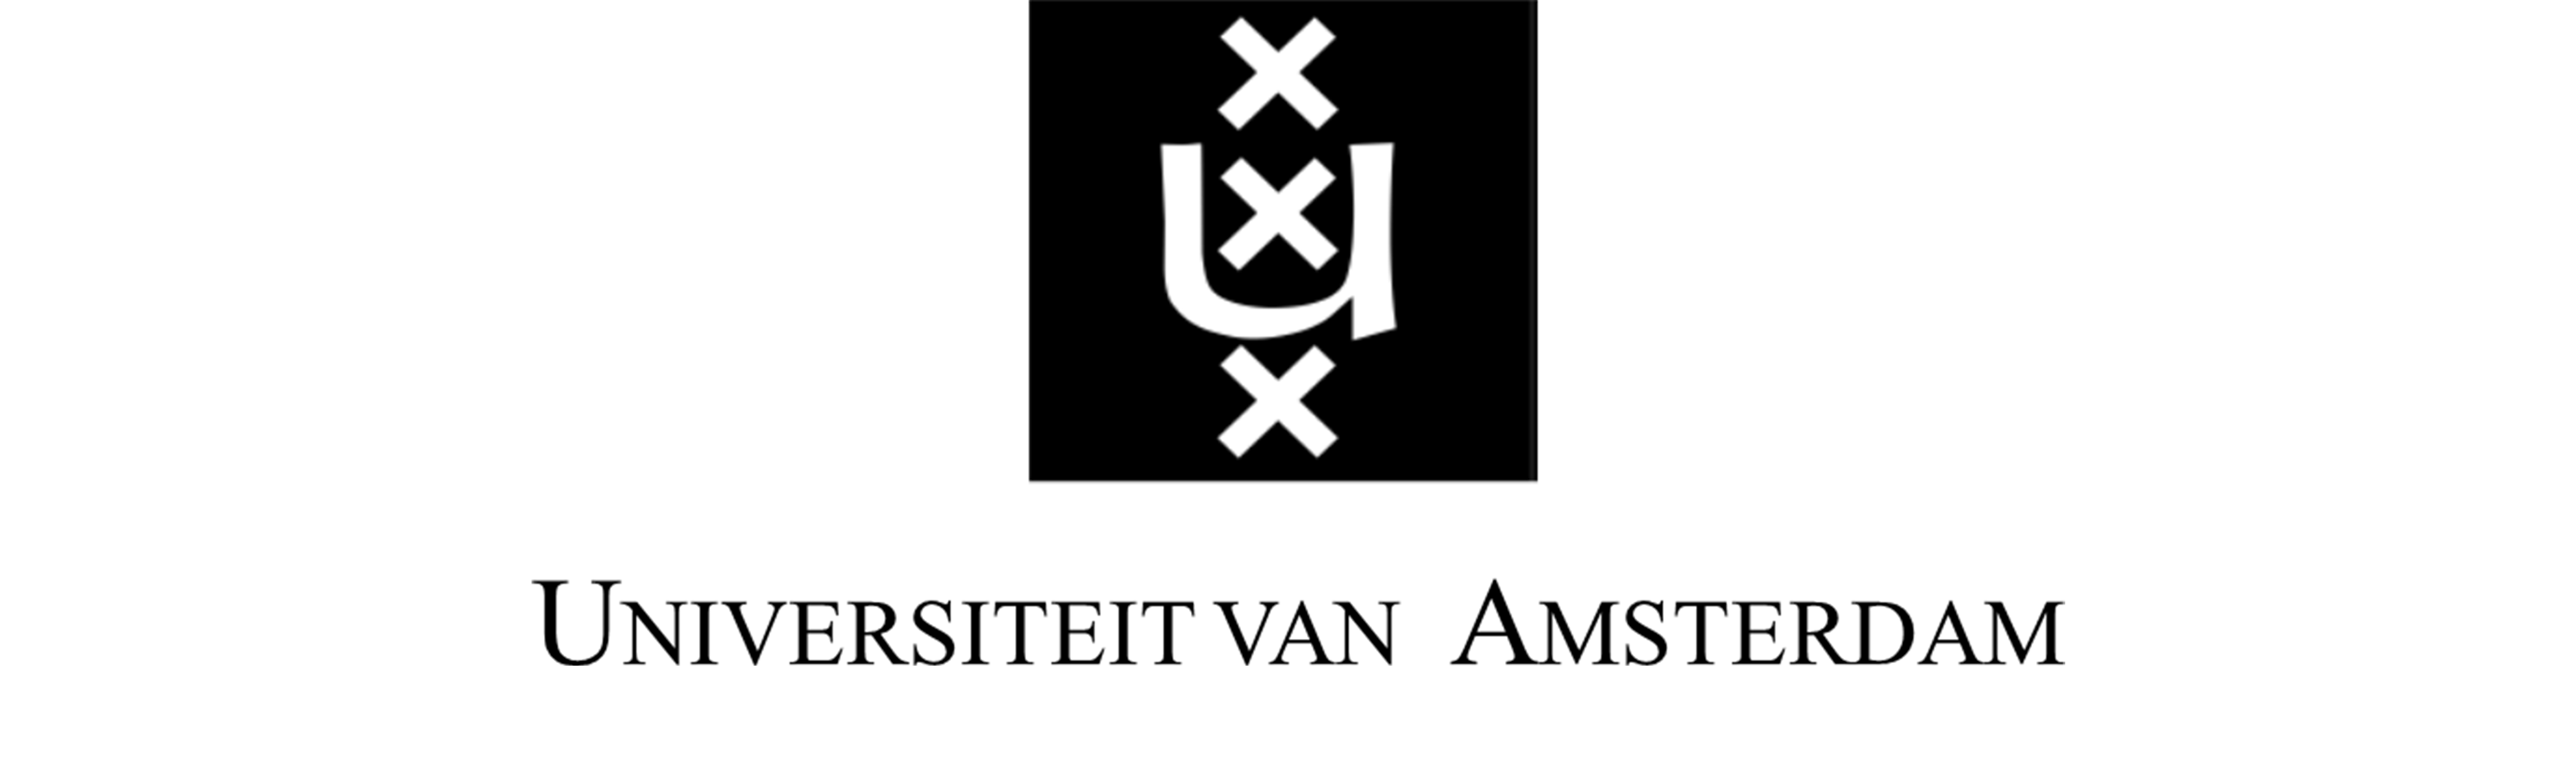 cropped-logo-uva